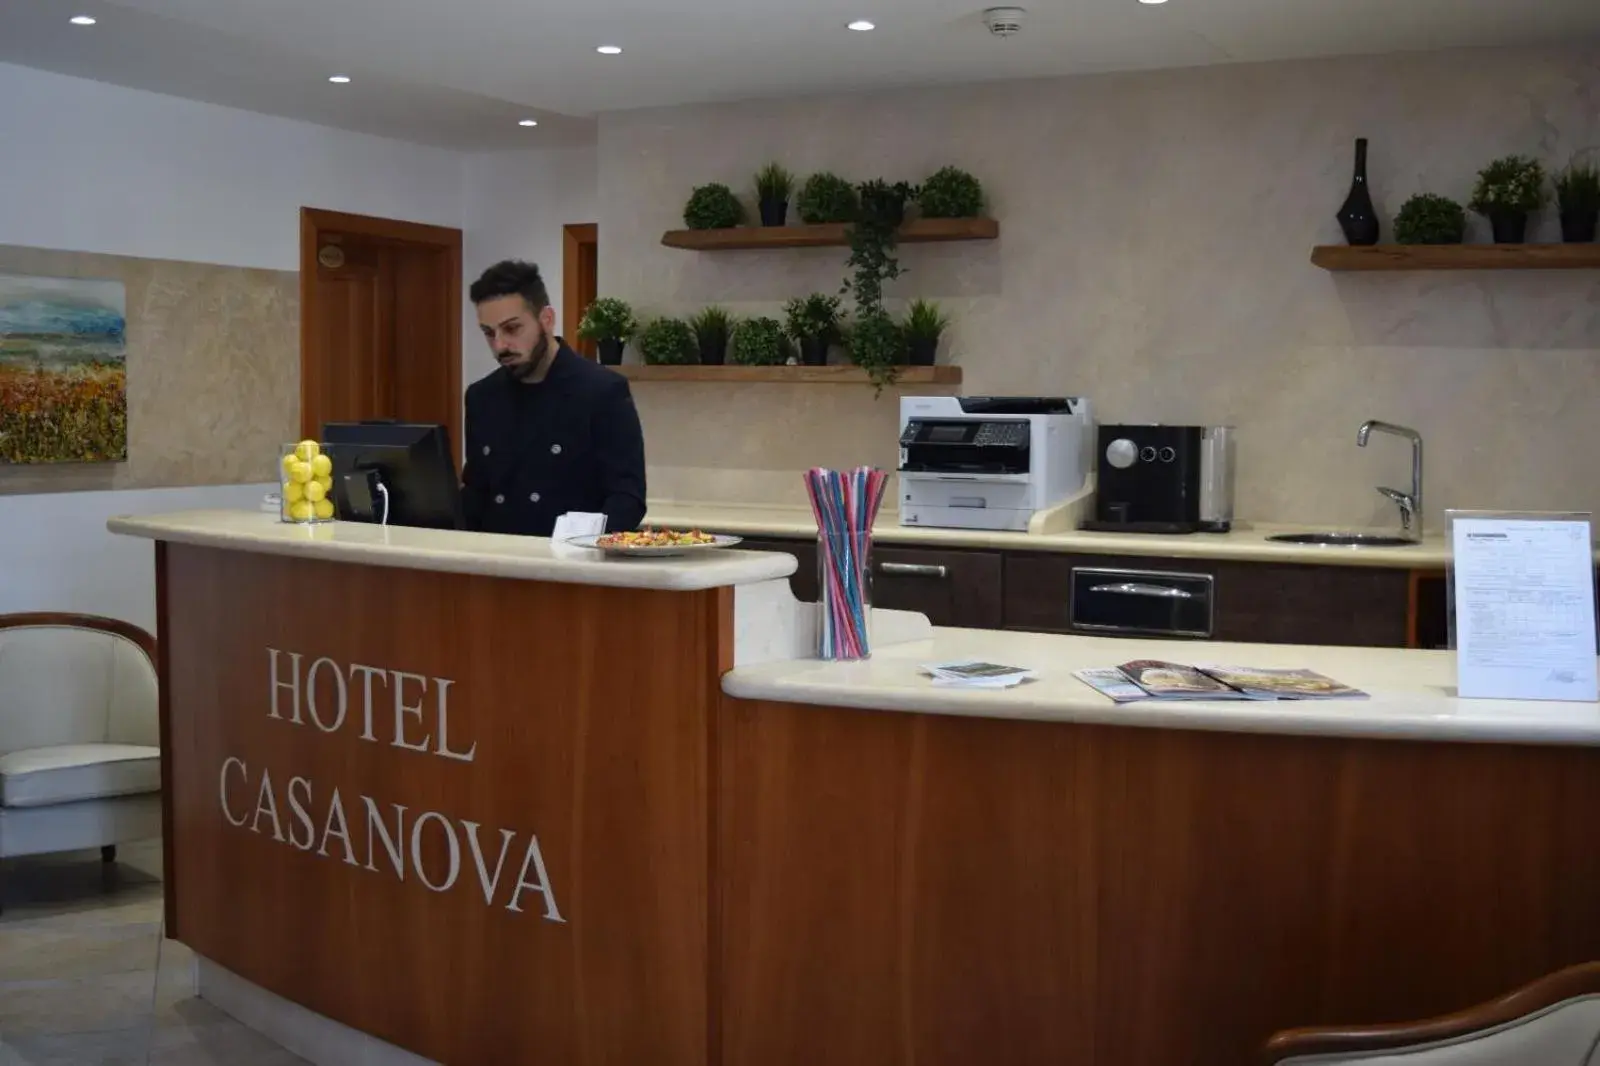 Staff in Hotel Casanova